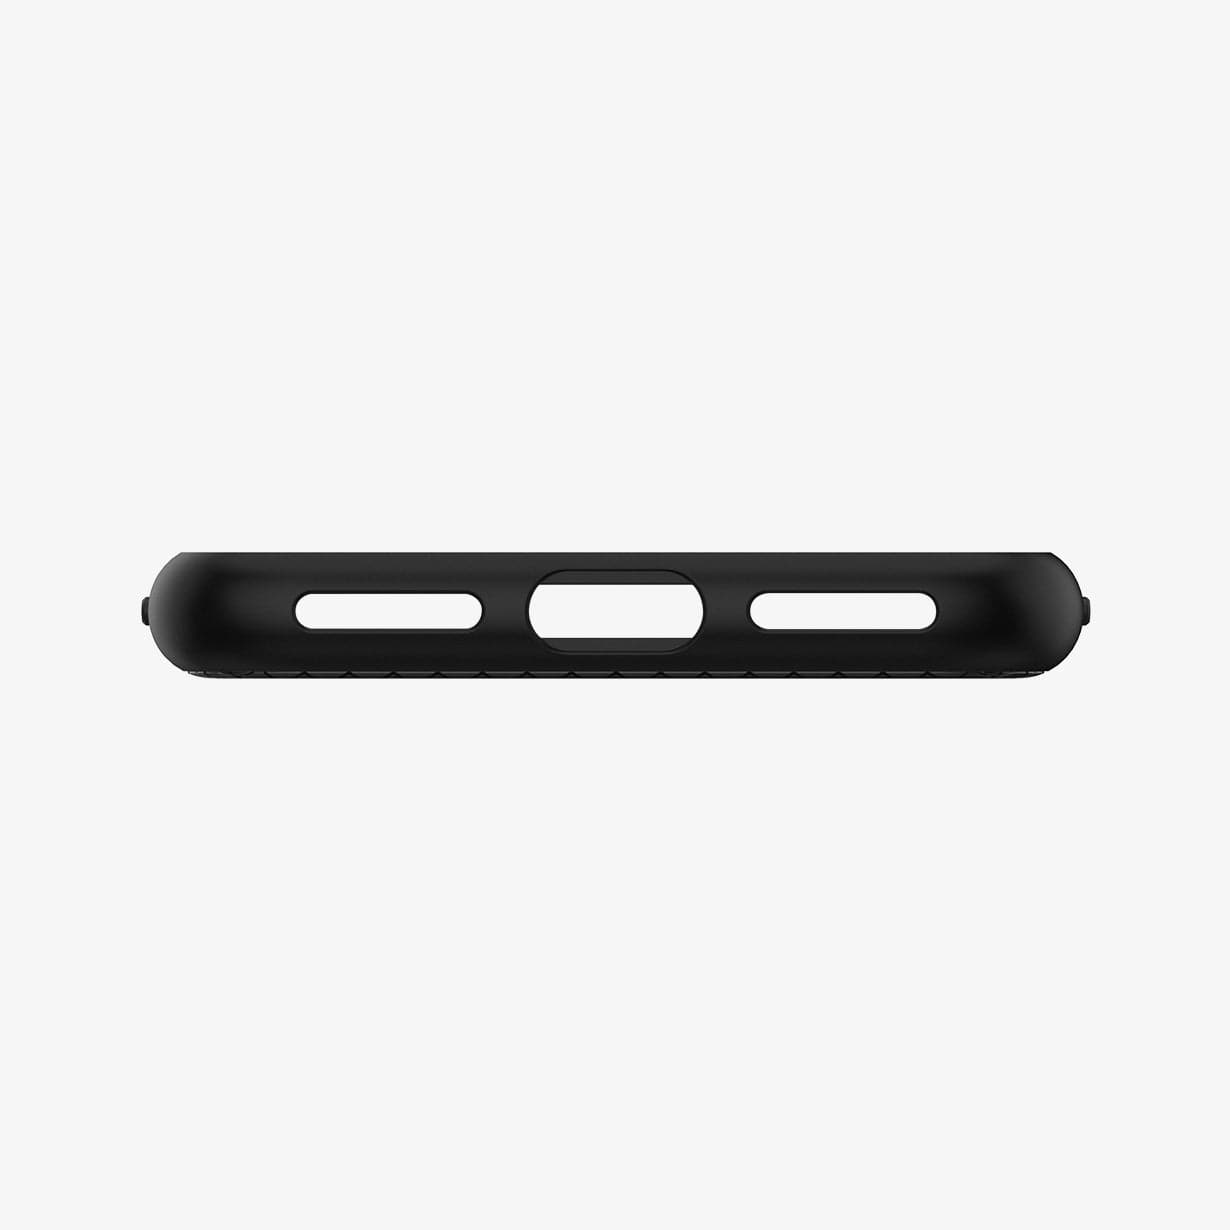 042CS20511 - iPhone 8 Series Liquid Air Case in Black showing the bottom